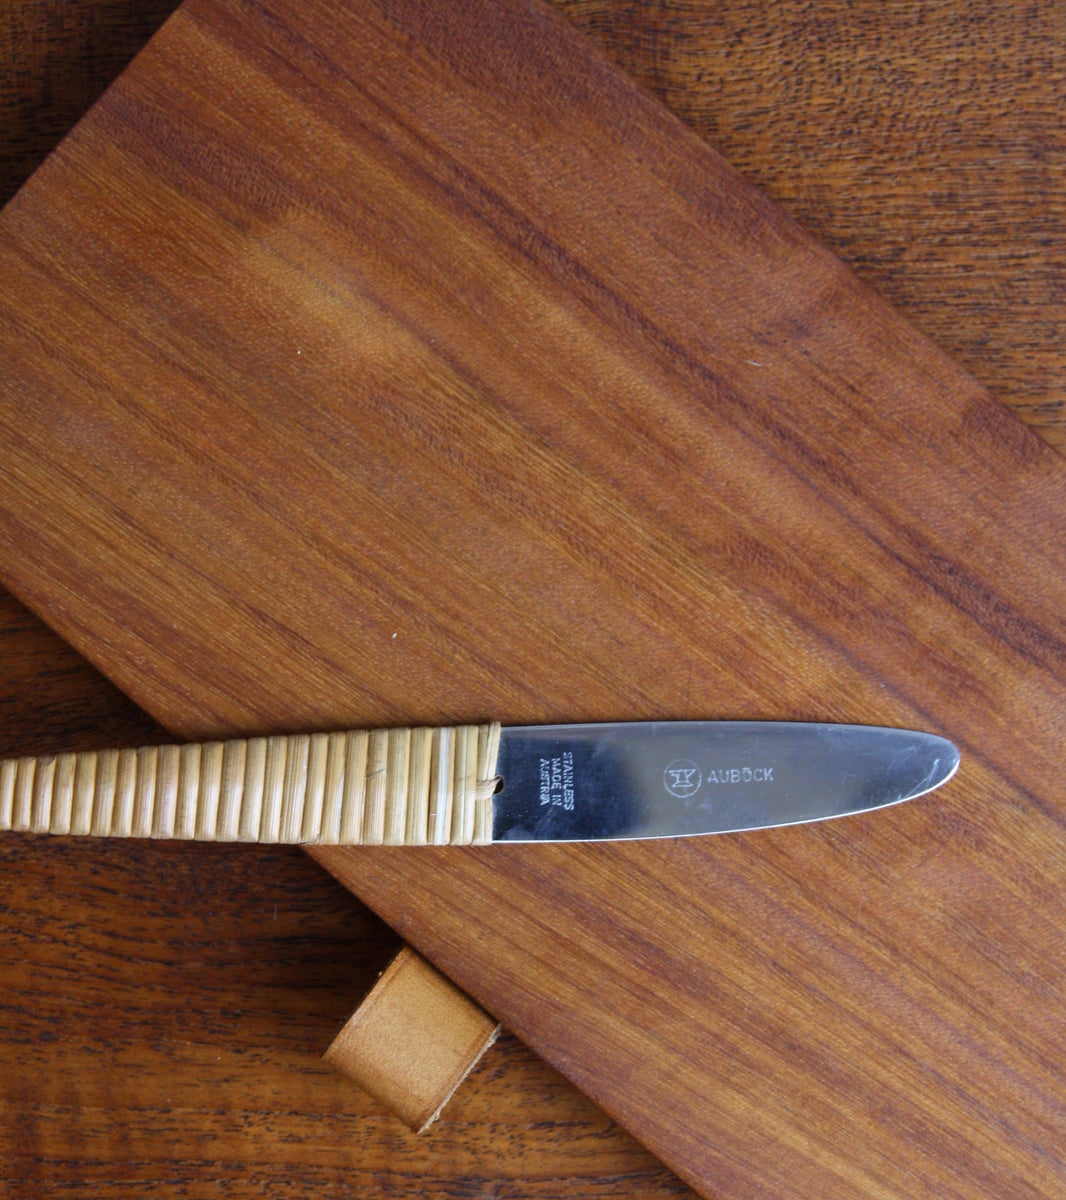 Walnut Cutting Board & Knife Carl Auböck - Image 4